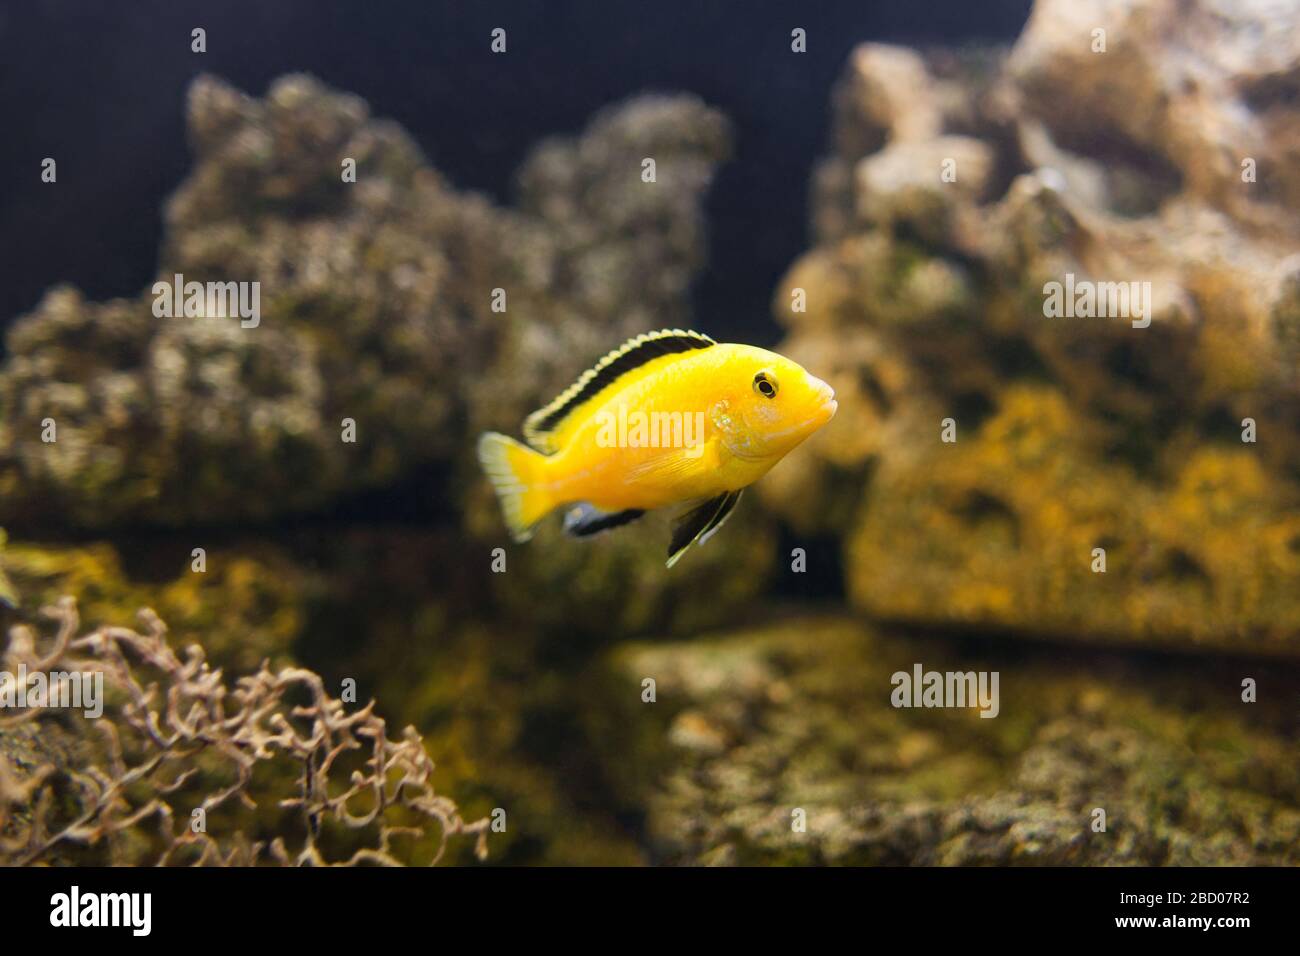 Electric Yellow Cichlid Fish in aquarium close-up. Stock Photo